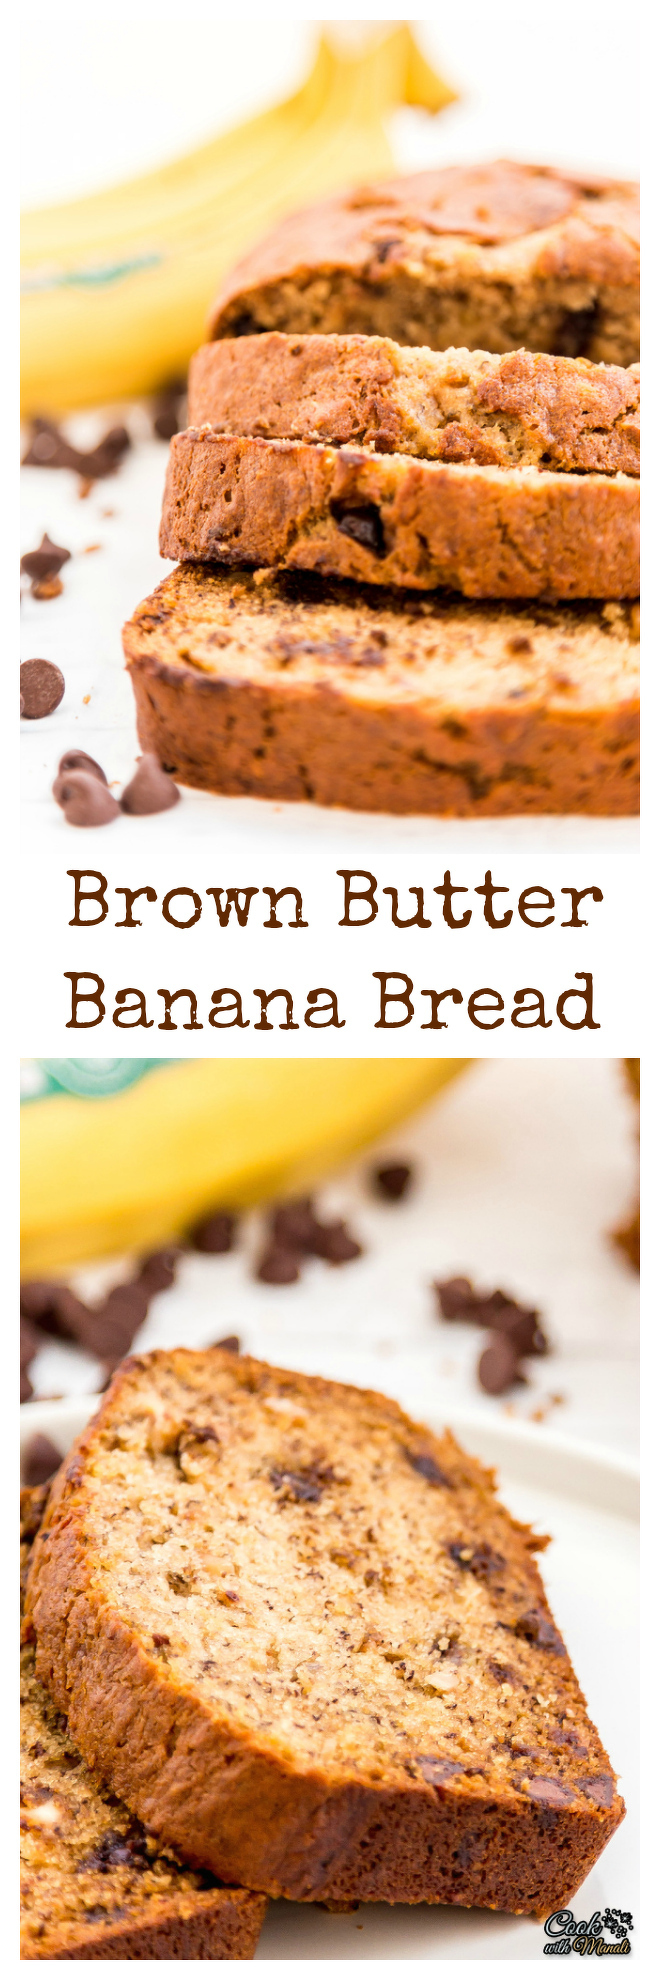 Brown Butter Banana Bread Collage-nocwm